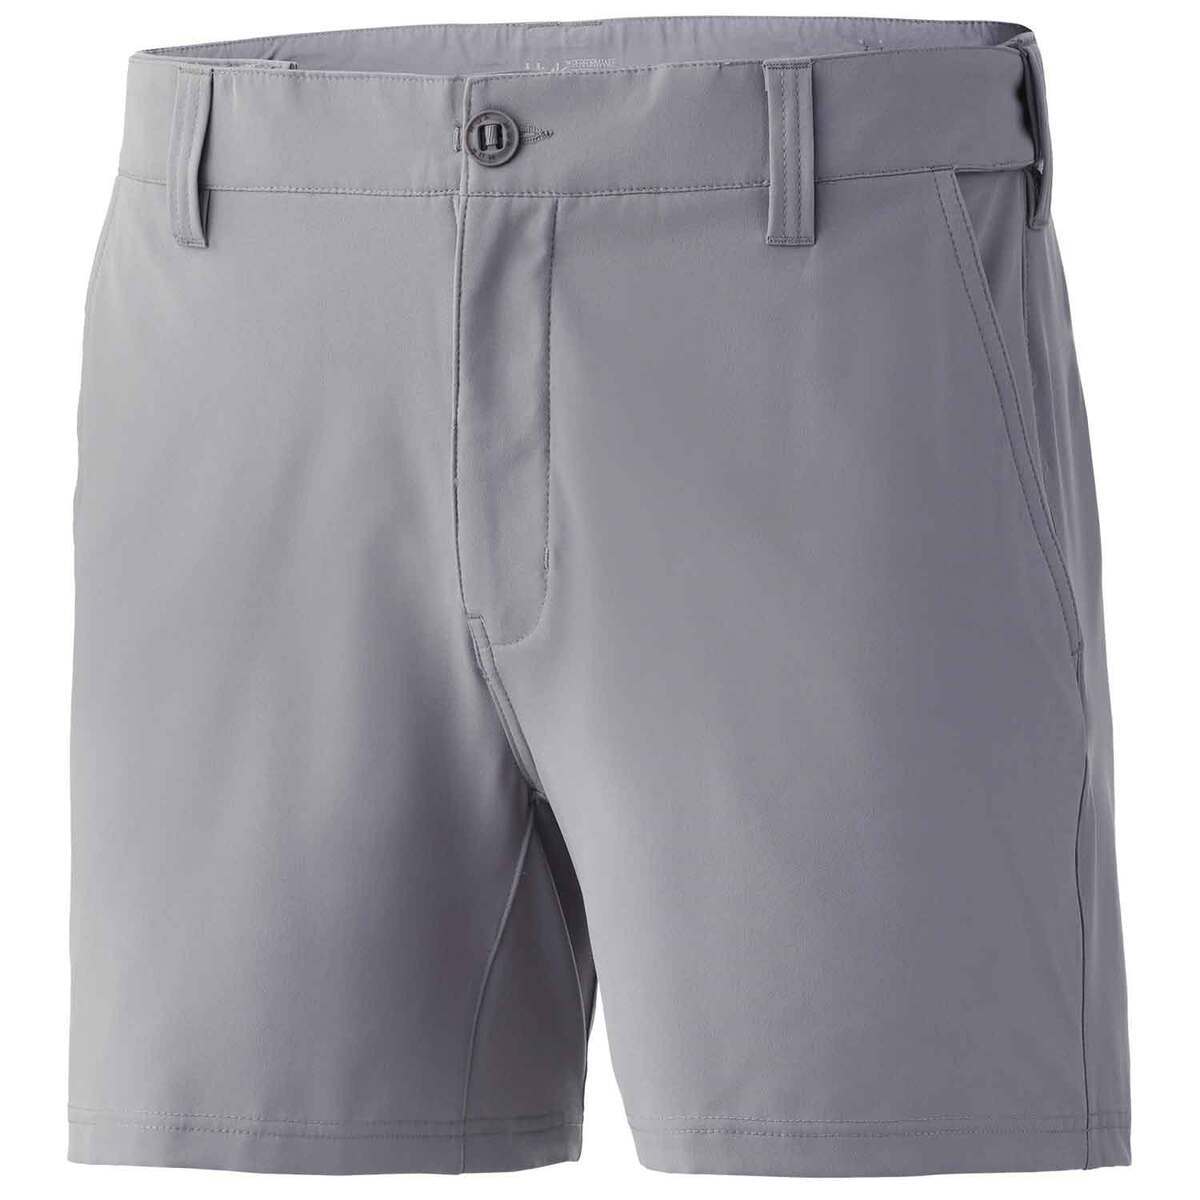 Huk Men's Pursuit Fishing Shorts - Overcast Grey - 3XL - Overcast